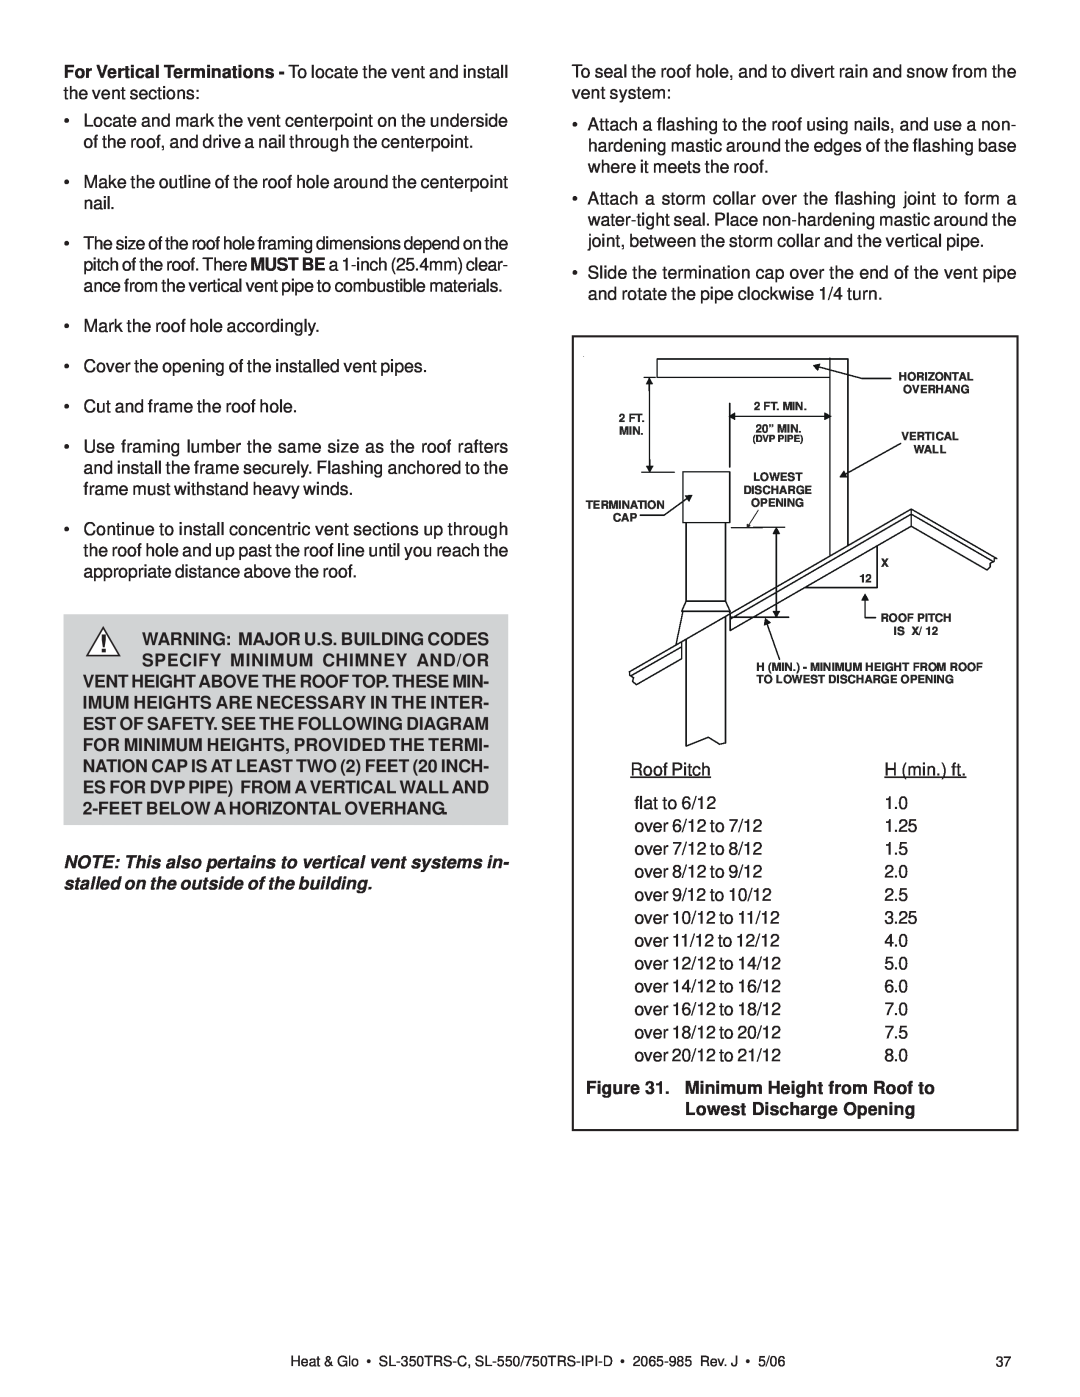 Heat & Glo LifeStyle SL-750TRS-IPI-D owner manual Mark the roof hole accordingly 